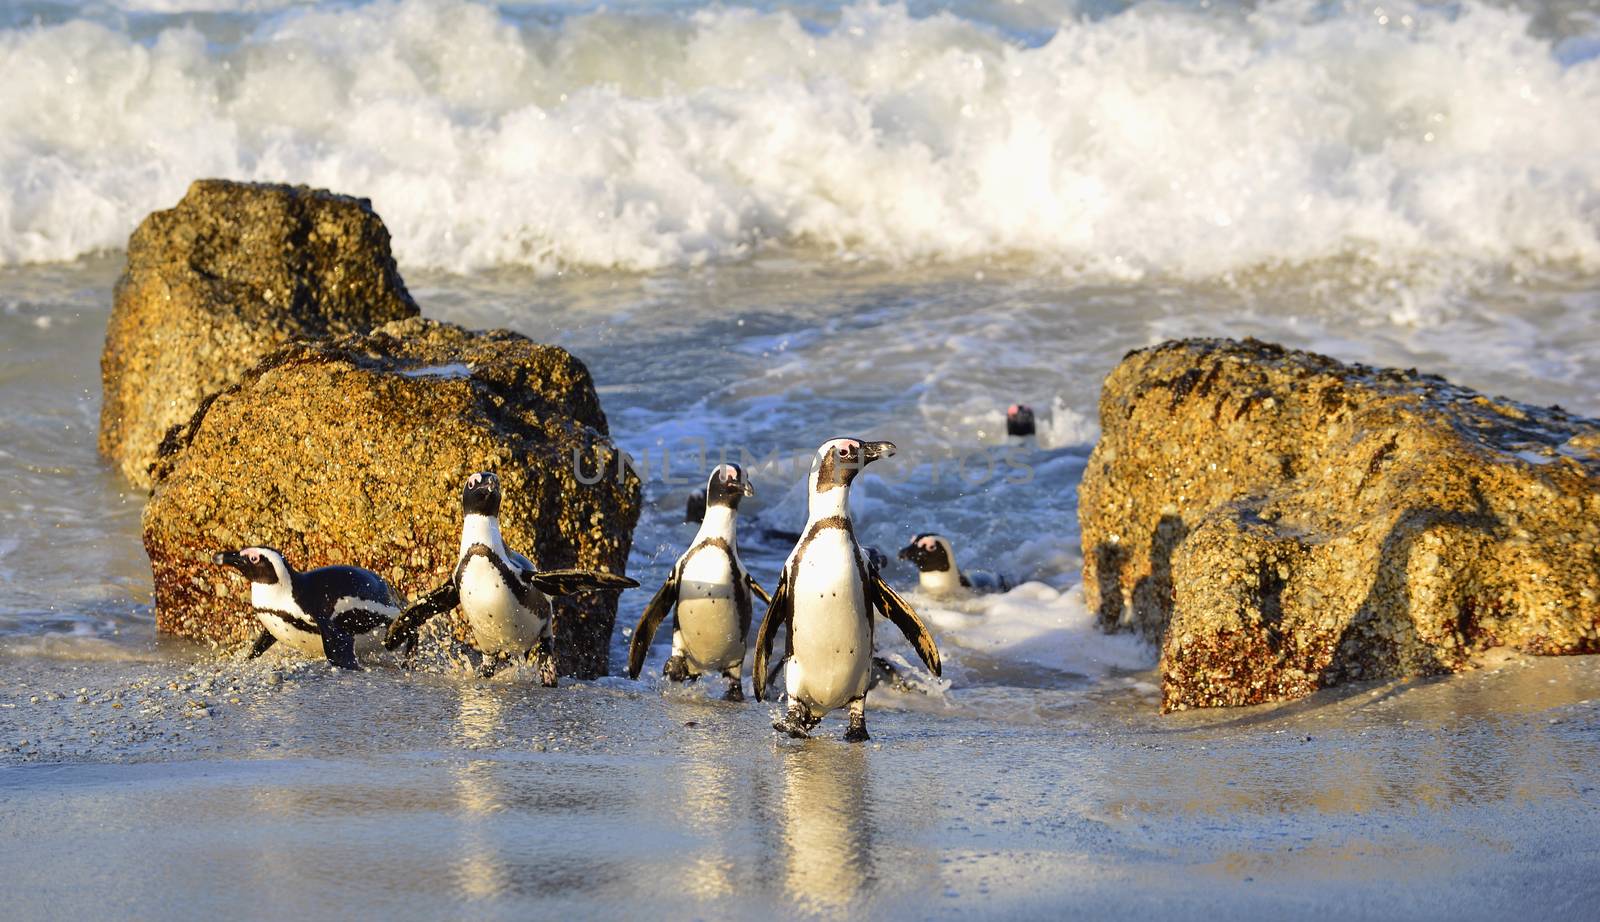 African penguins (spheniscus demersus) at the ocean. by SURZ